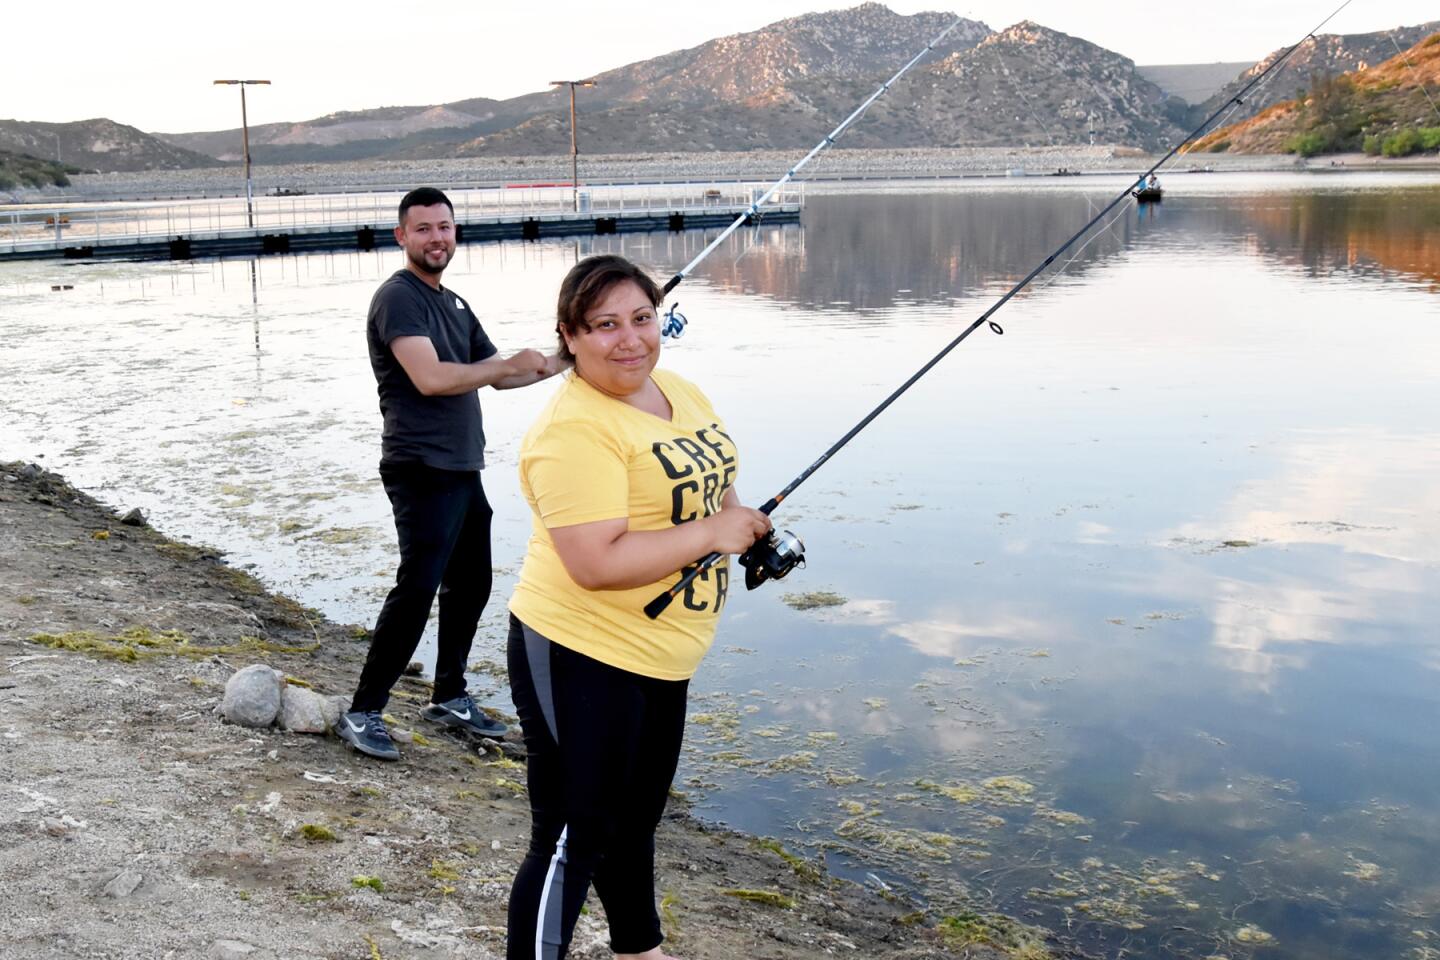 Night fishing hours open through Sept. 5 at Lake Poway - Pomerado